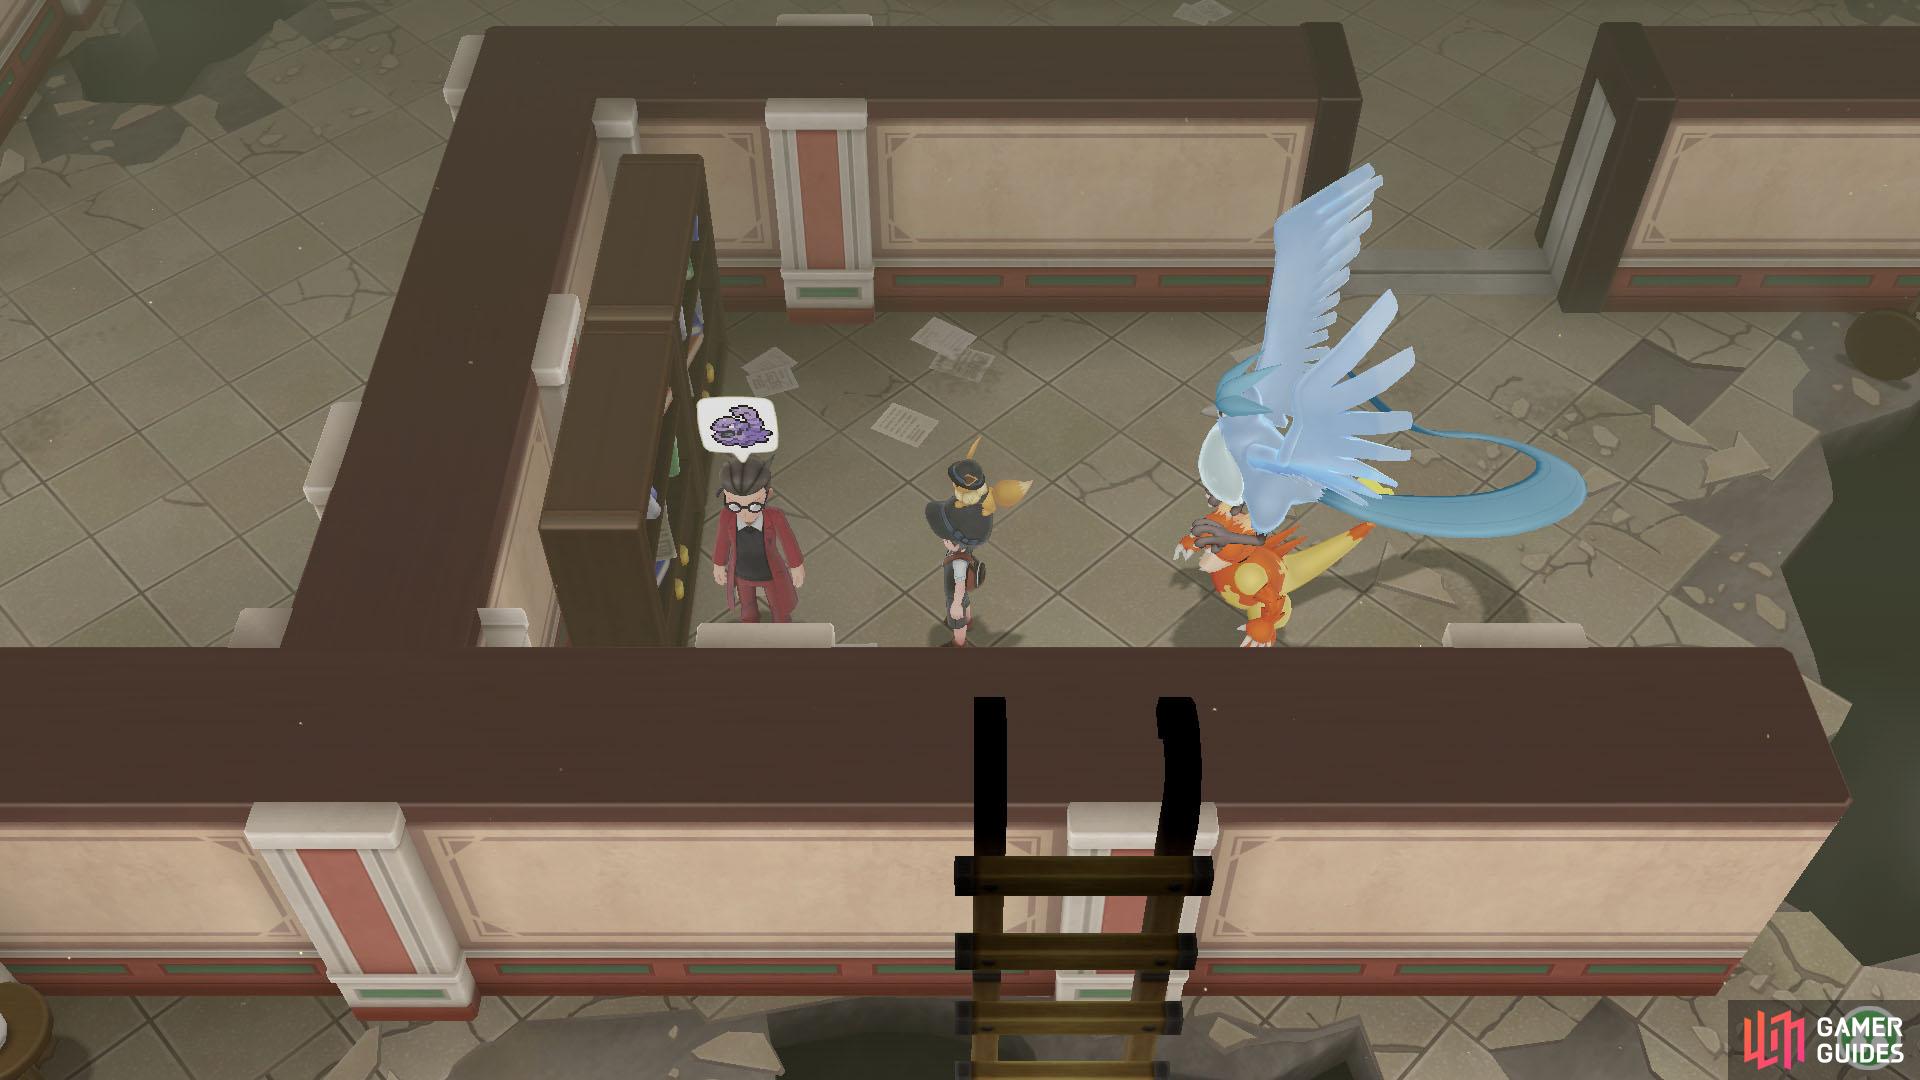 089 Muk - Pokémon Mansion: Towards center of Floor 2. 